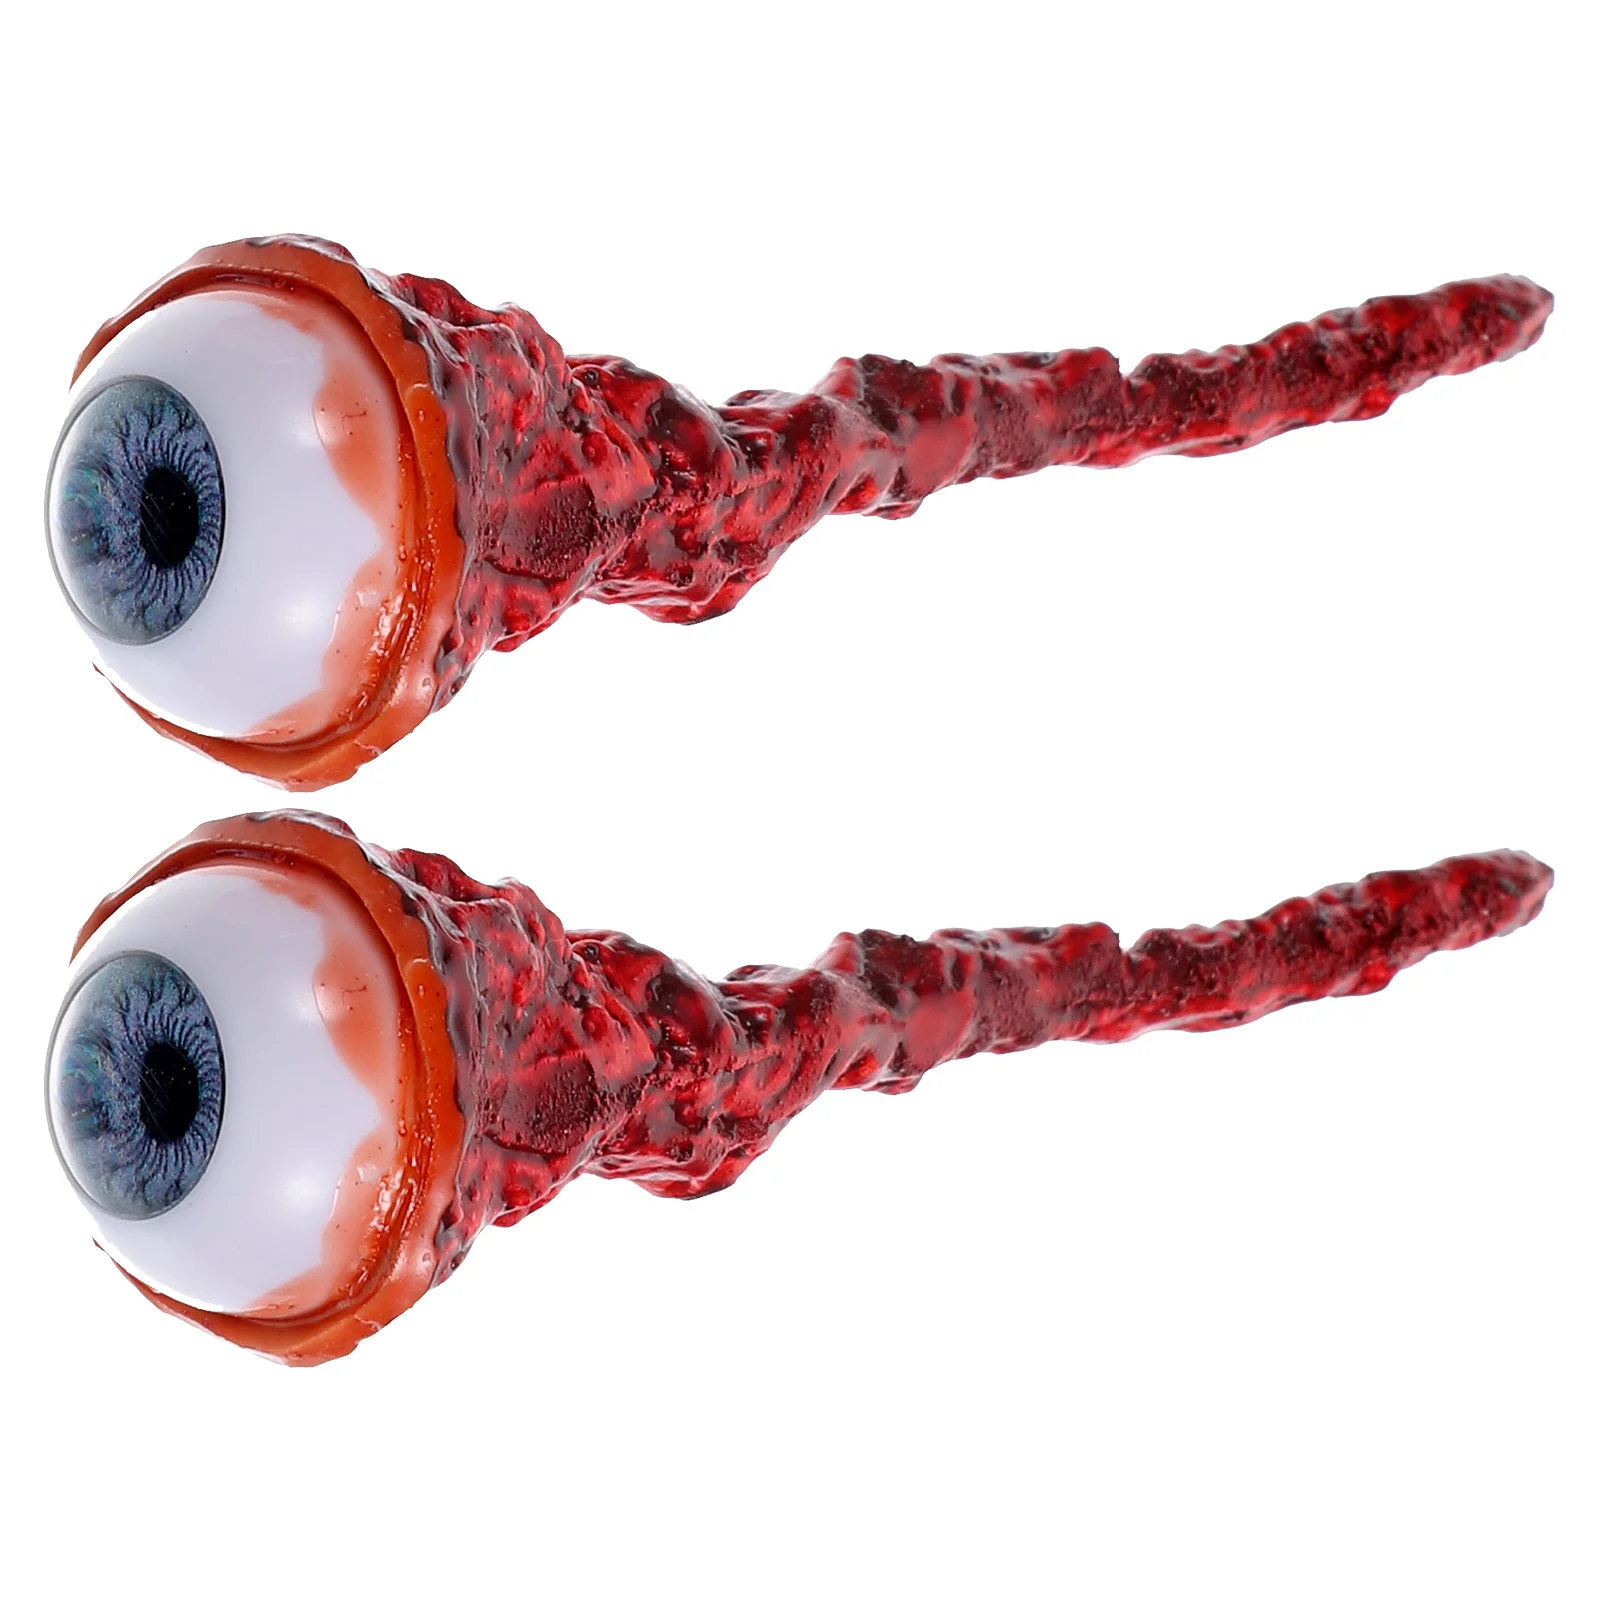 

2 Pcs Scary Eyeball Halloween Decoration Fake Portable Eyeballs Plastic Outdoor Playsets Playing Toy Festival Horror